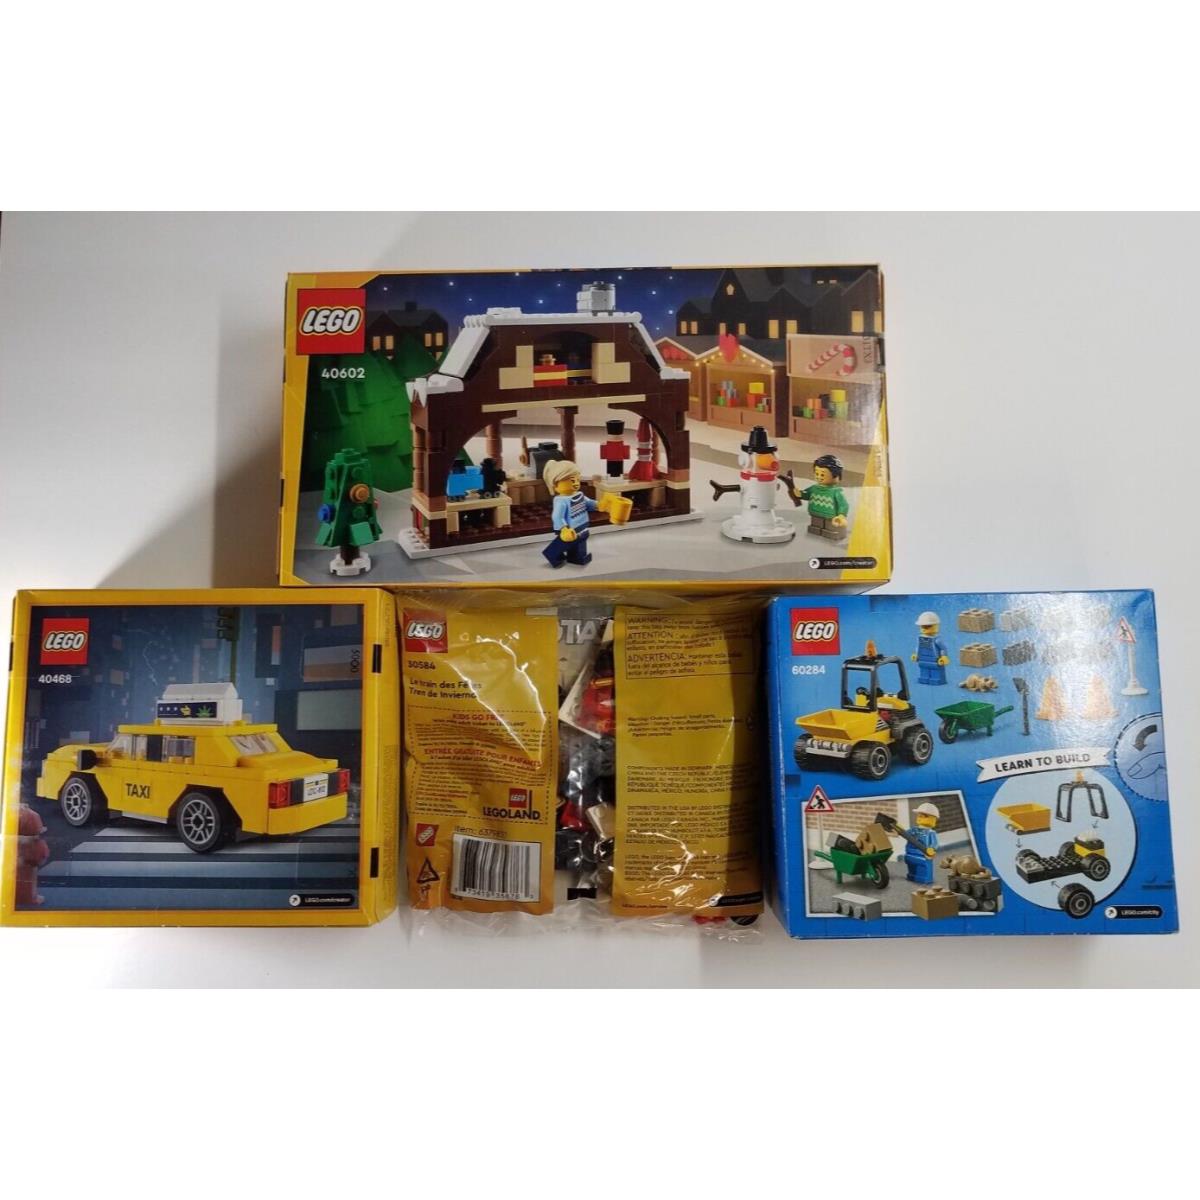 Lego 40602 Market Train 30584 Yellow Taxi 40468 Roadwork Truck 60284